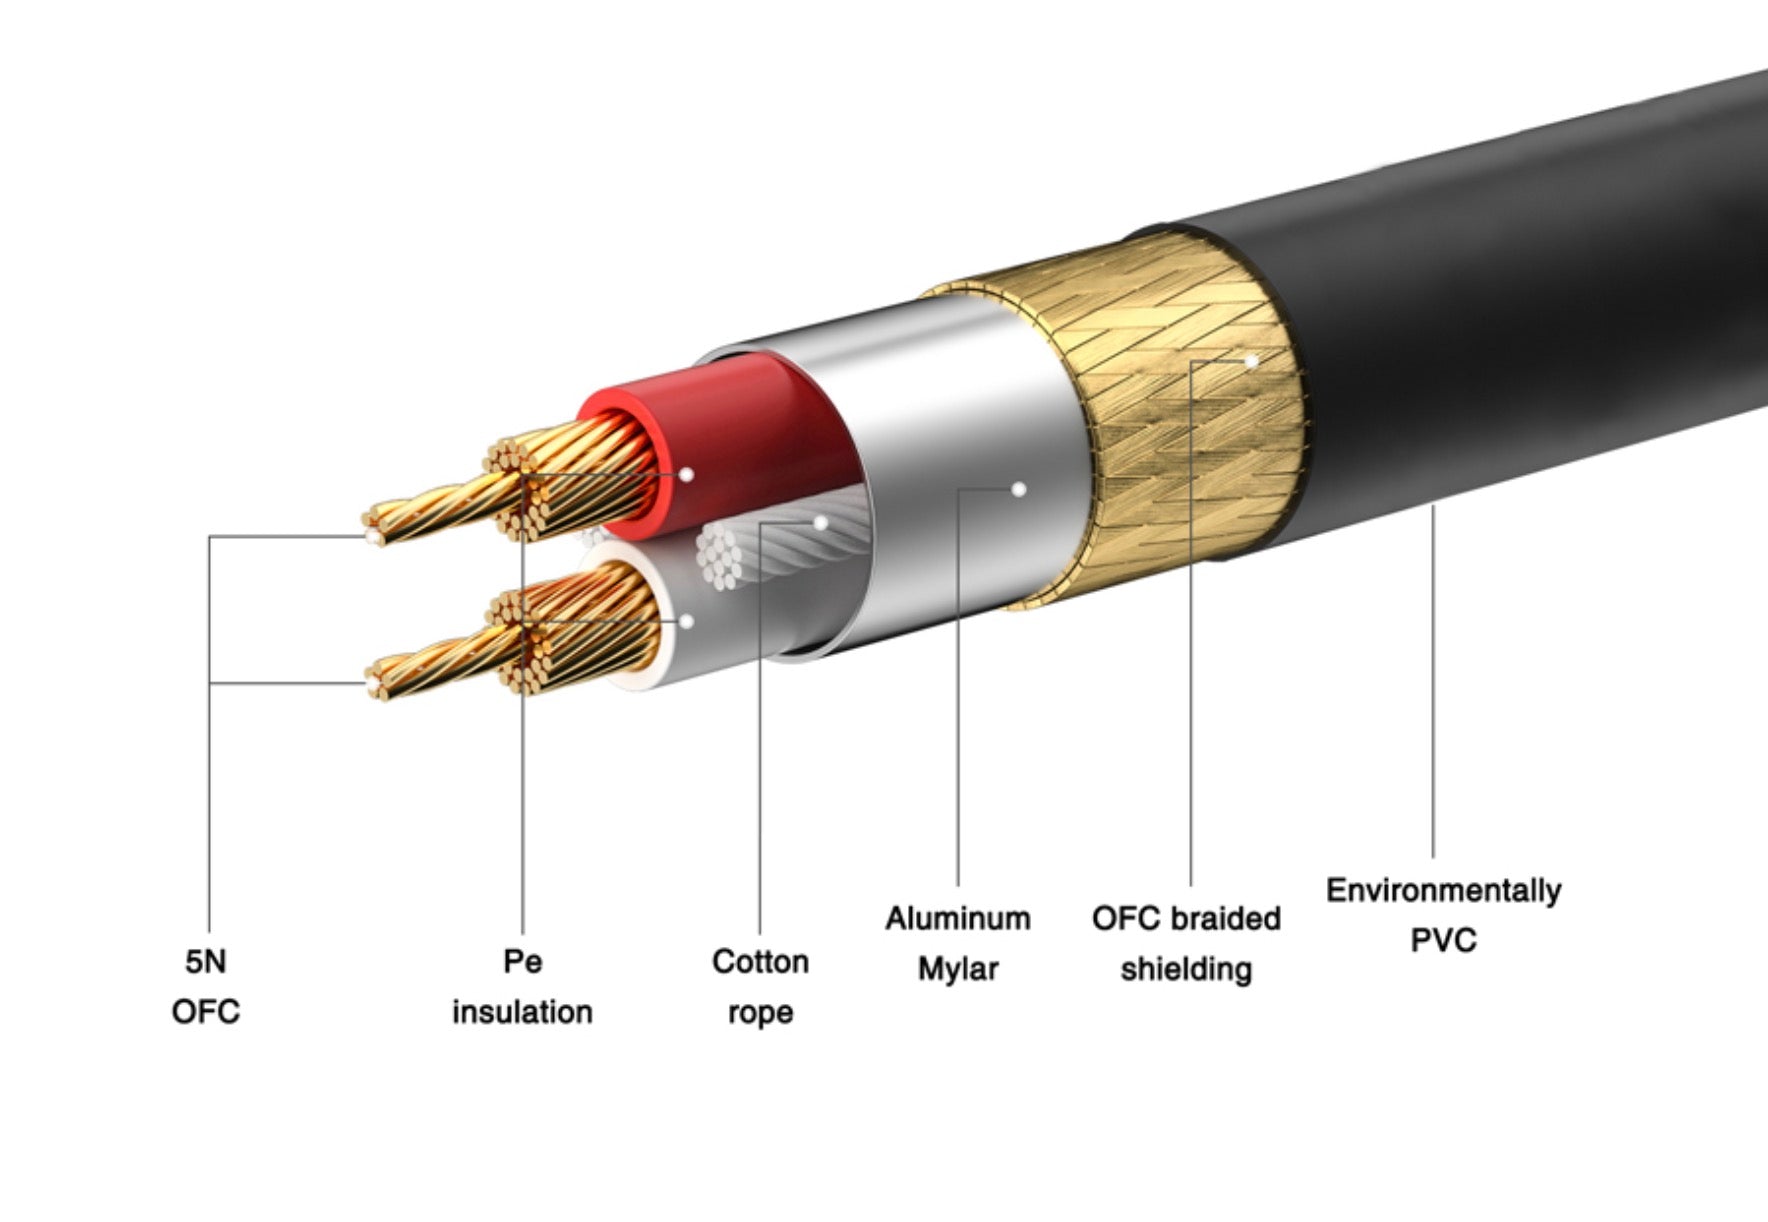 XLR 3 pin Male to XLR Female Audio Microphone Cable 5m